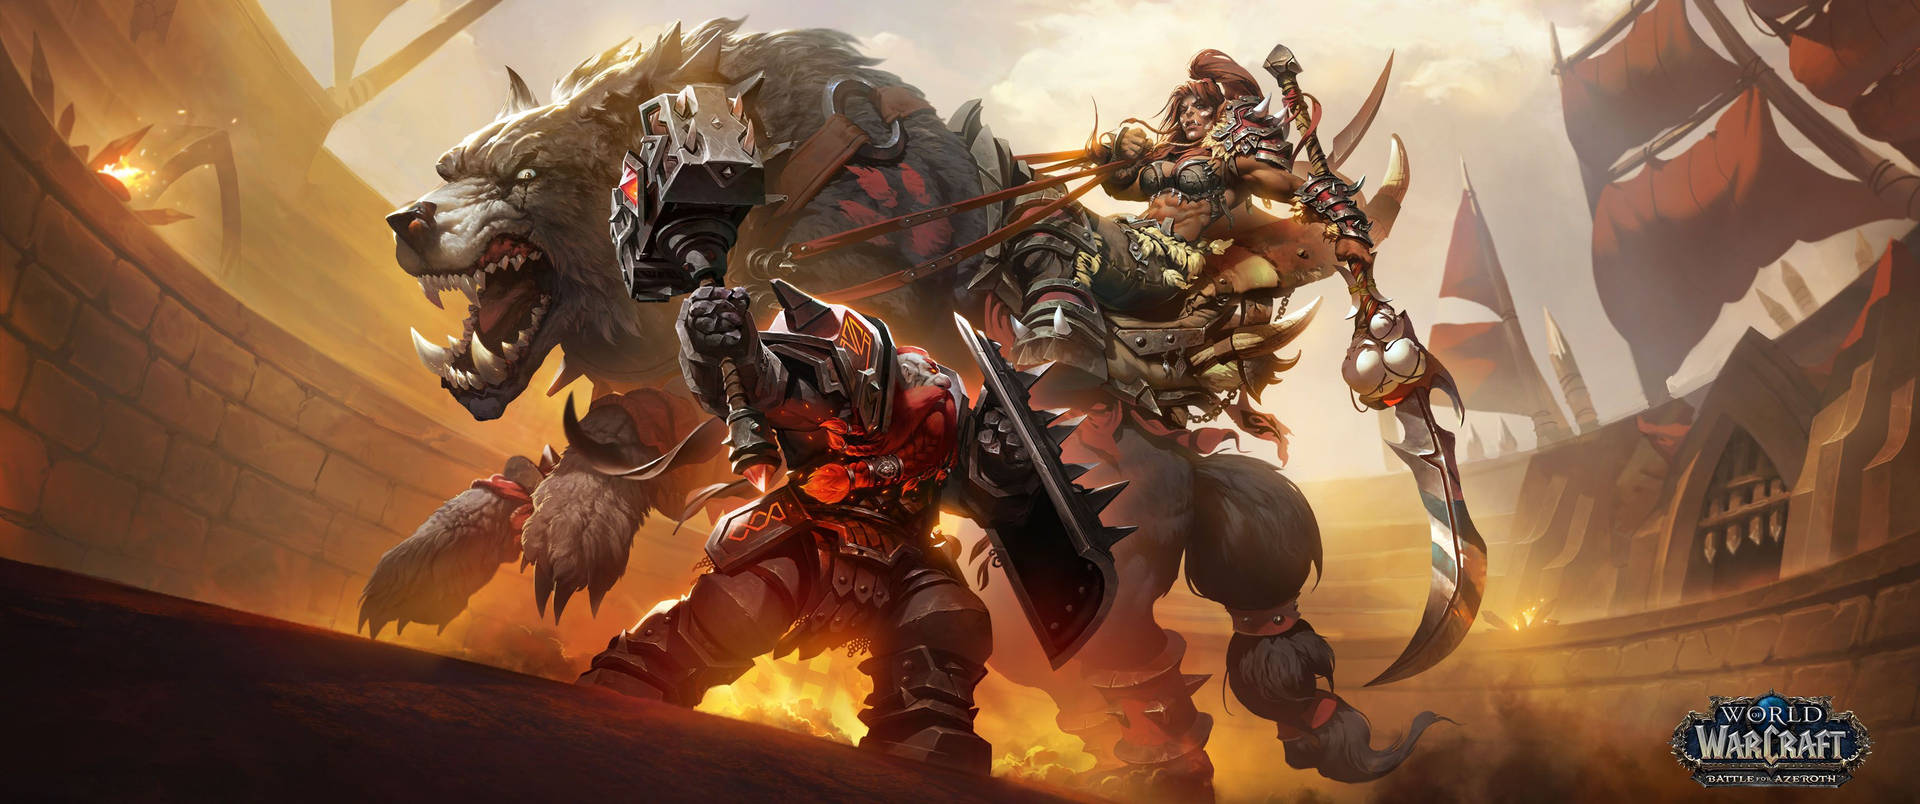 WoW Dwarf Versus Orc Arena Wallpaper